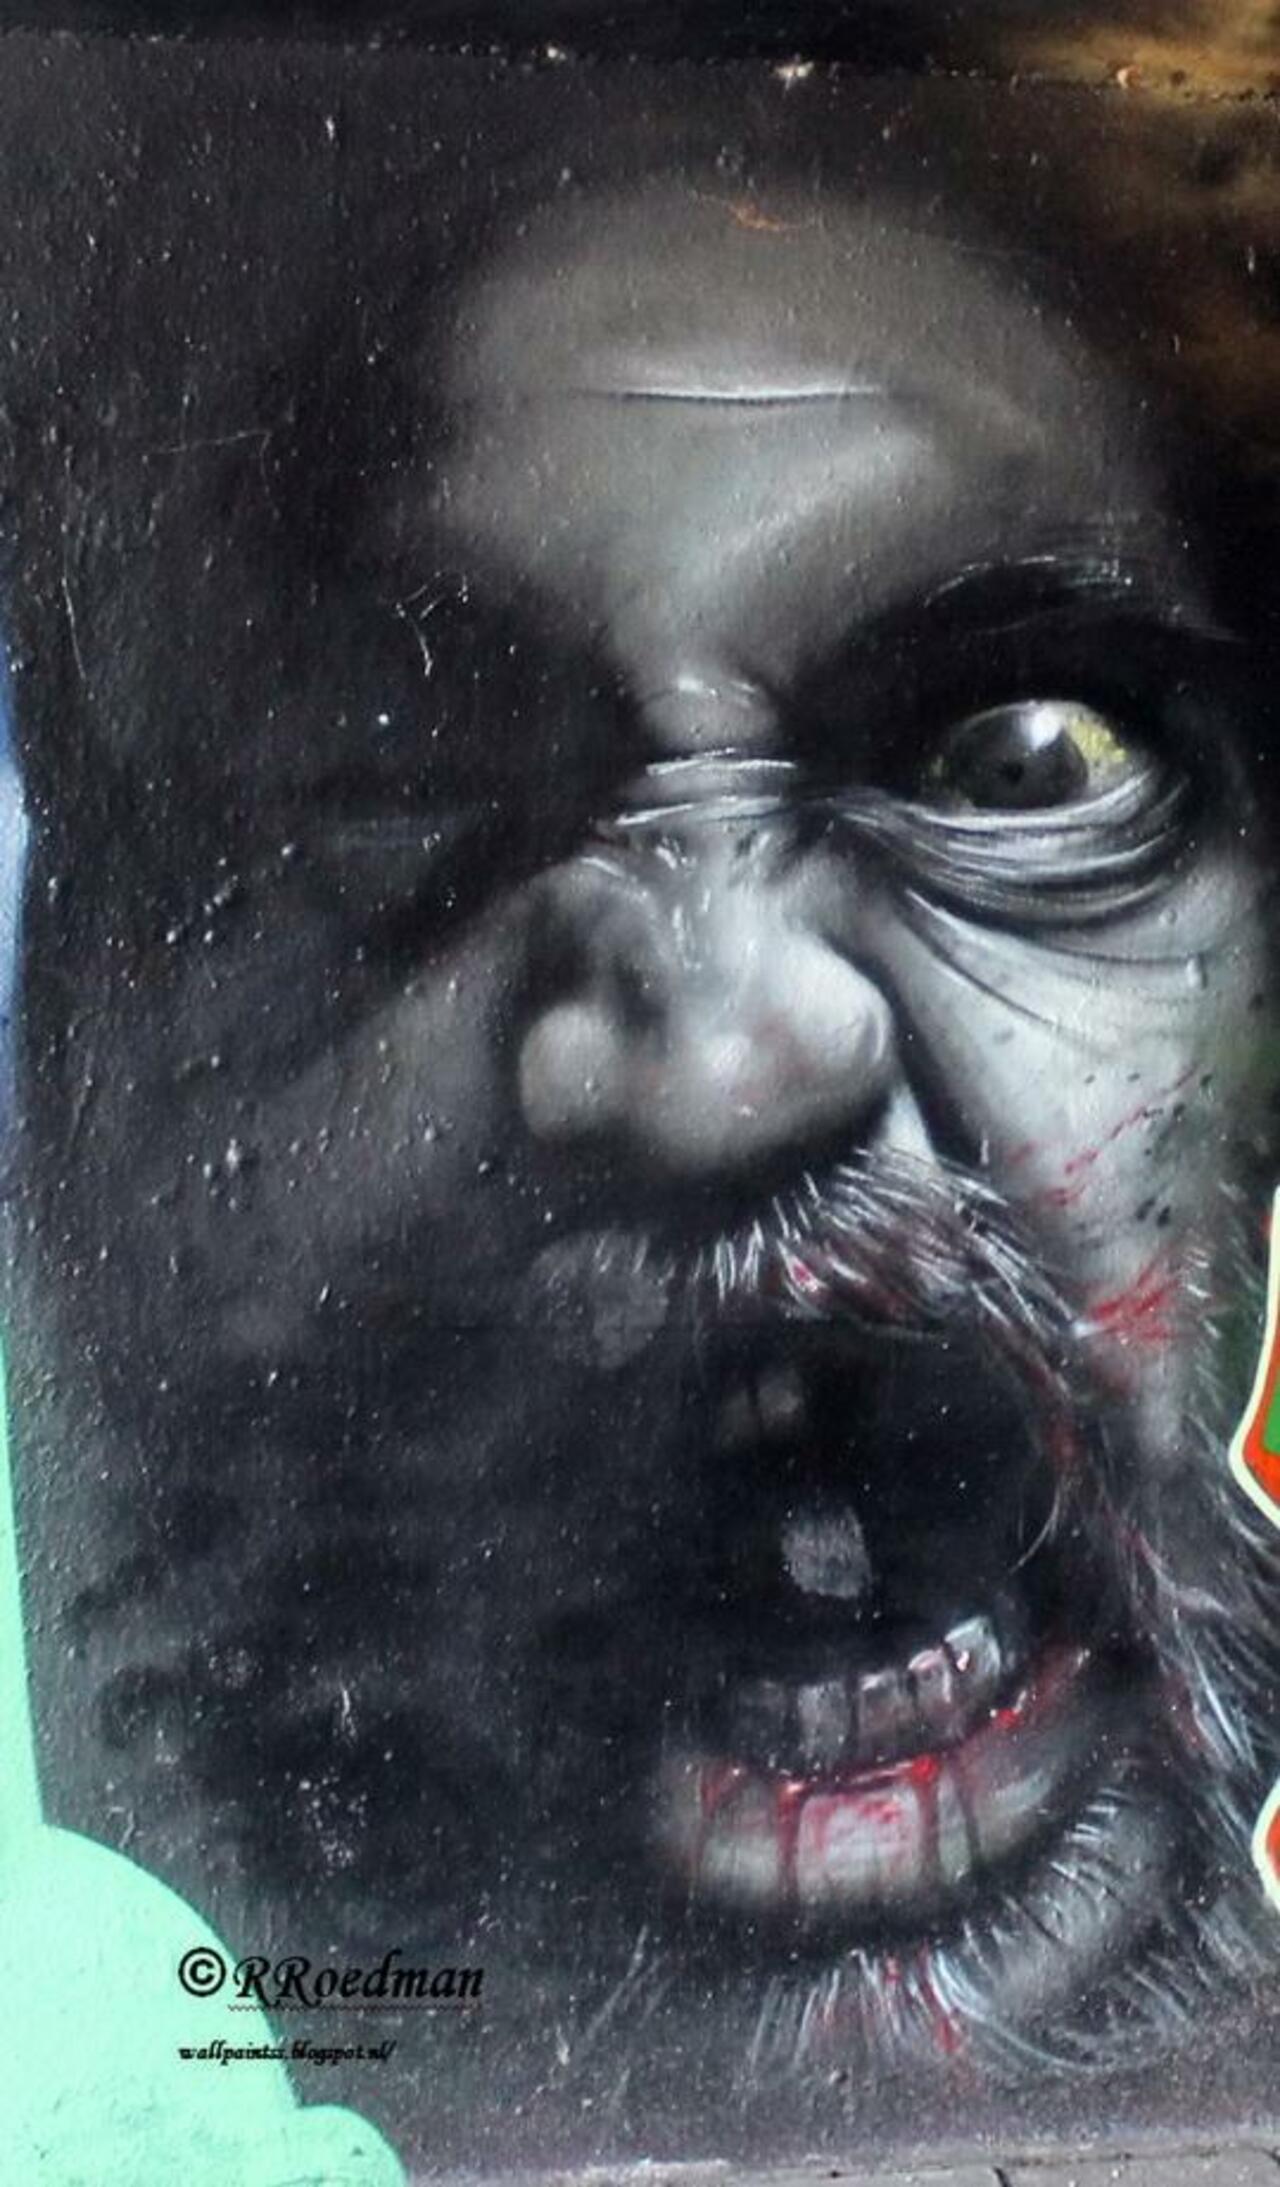 RT @RRoedman: #streetart #graffiti  #mural scary face in  #Eindhoven, 2 pics at  http://wallpaintss.blogspot.nl http://t.co/kOZ0N57mdj